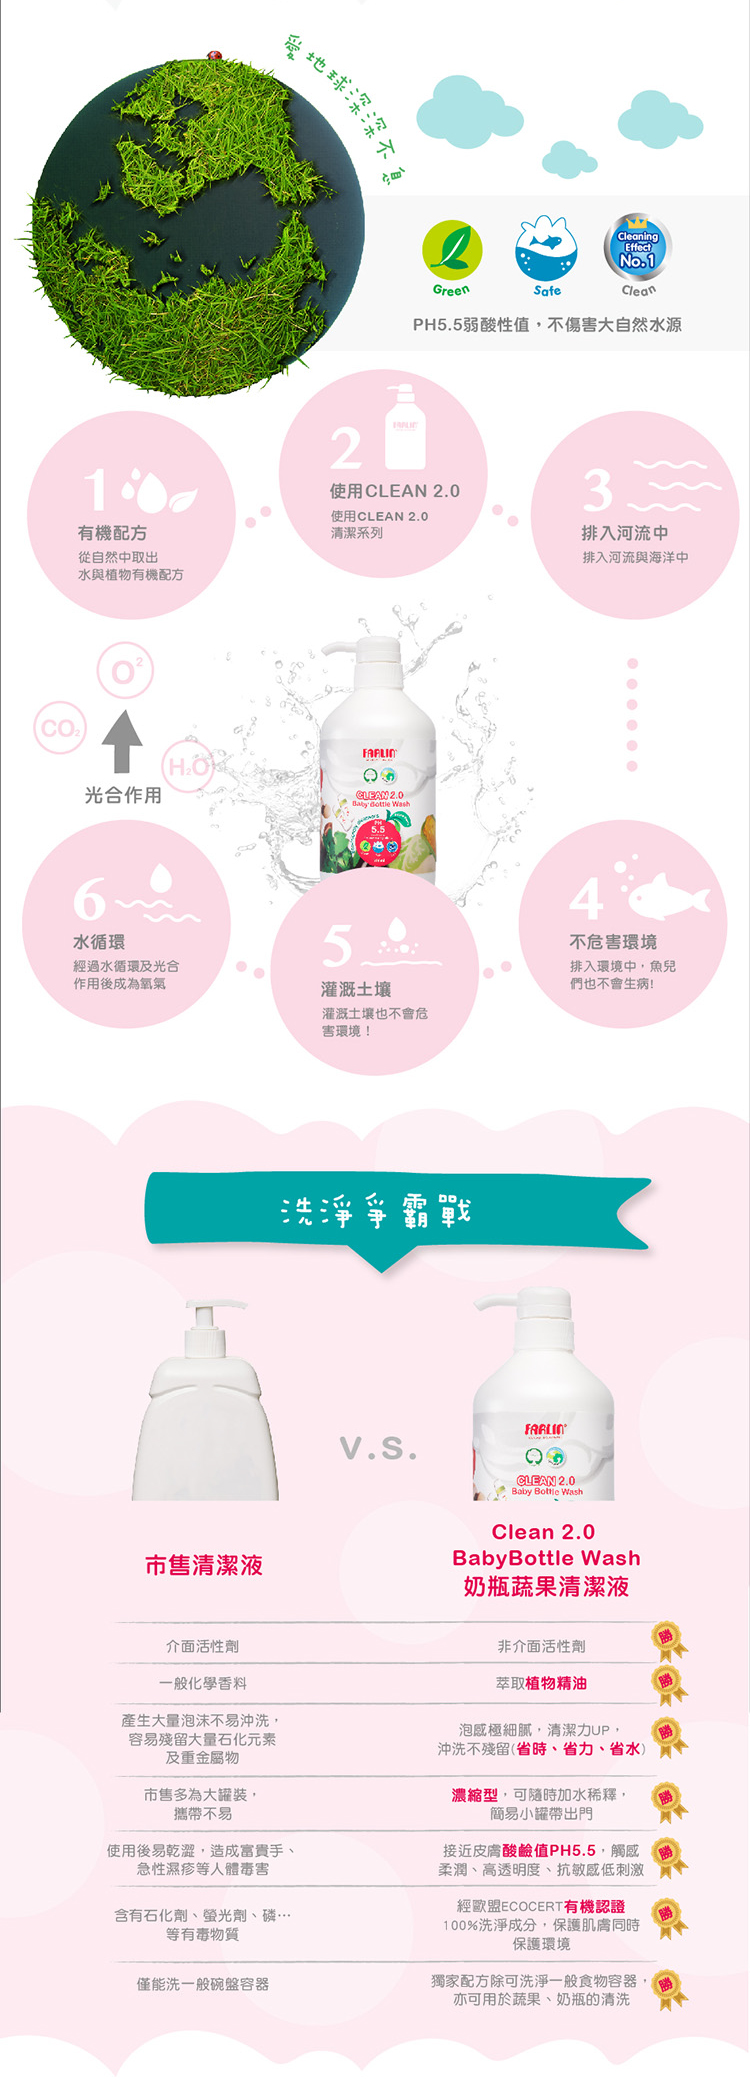 【FARLIN】植物性蔬果奶瓶清潔劑(隨身瓶/100ml)